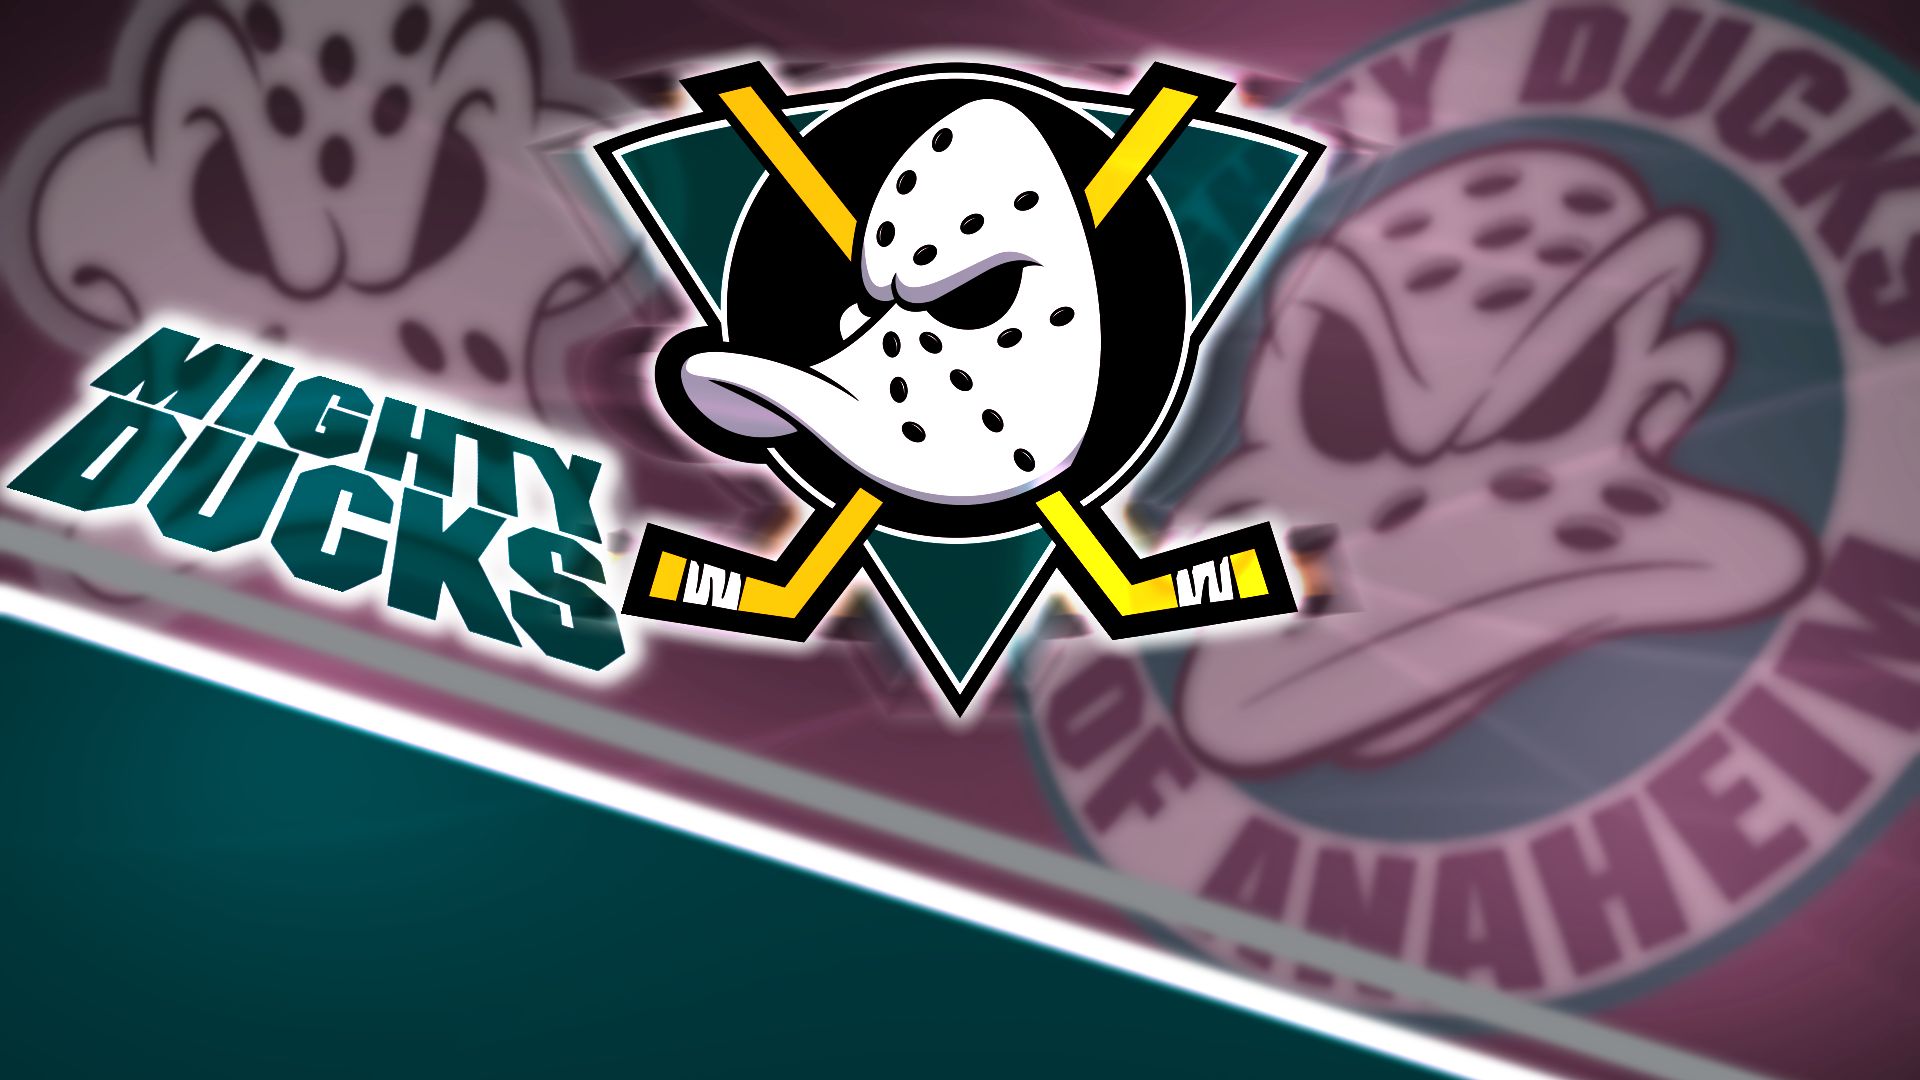 anaheim ducks, sports, emblem, logo, nhl, hockey